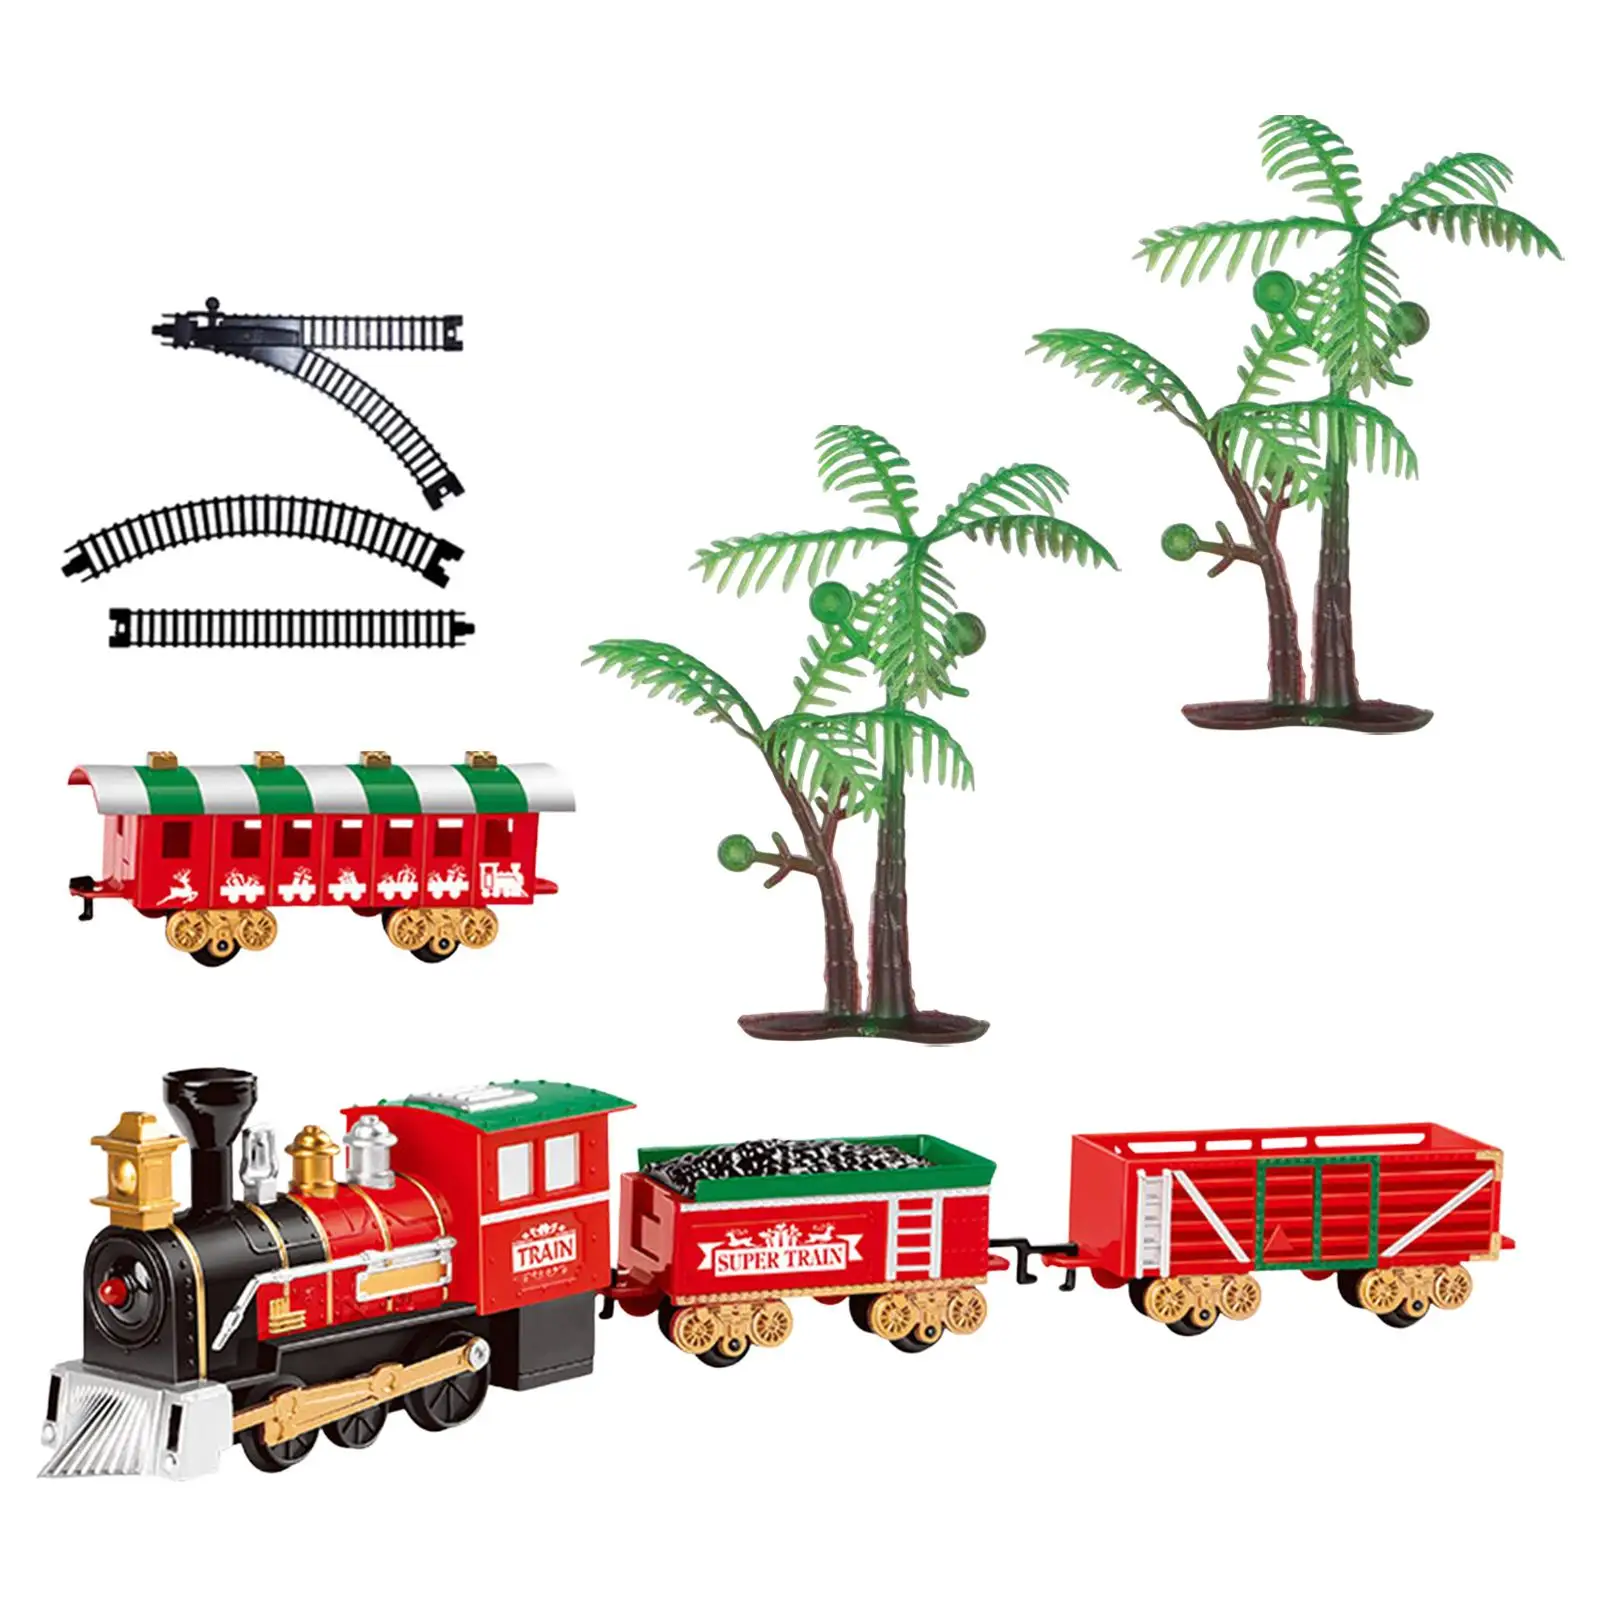 Electric Train Set Fine Motor Skills Railway Tracks Toy Building Construction Set Railway Track Set for Girls Boys Children Kids